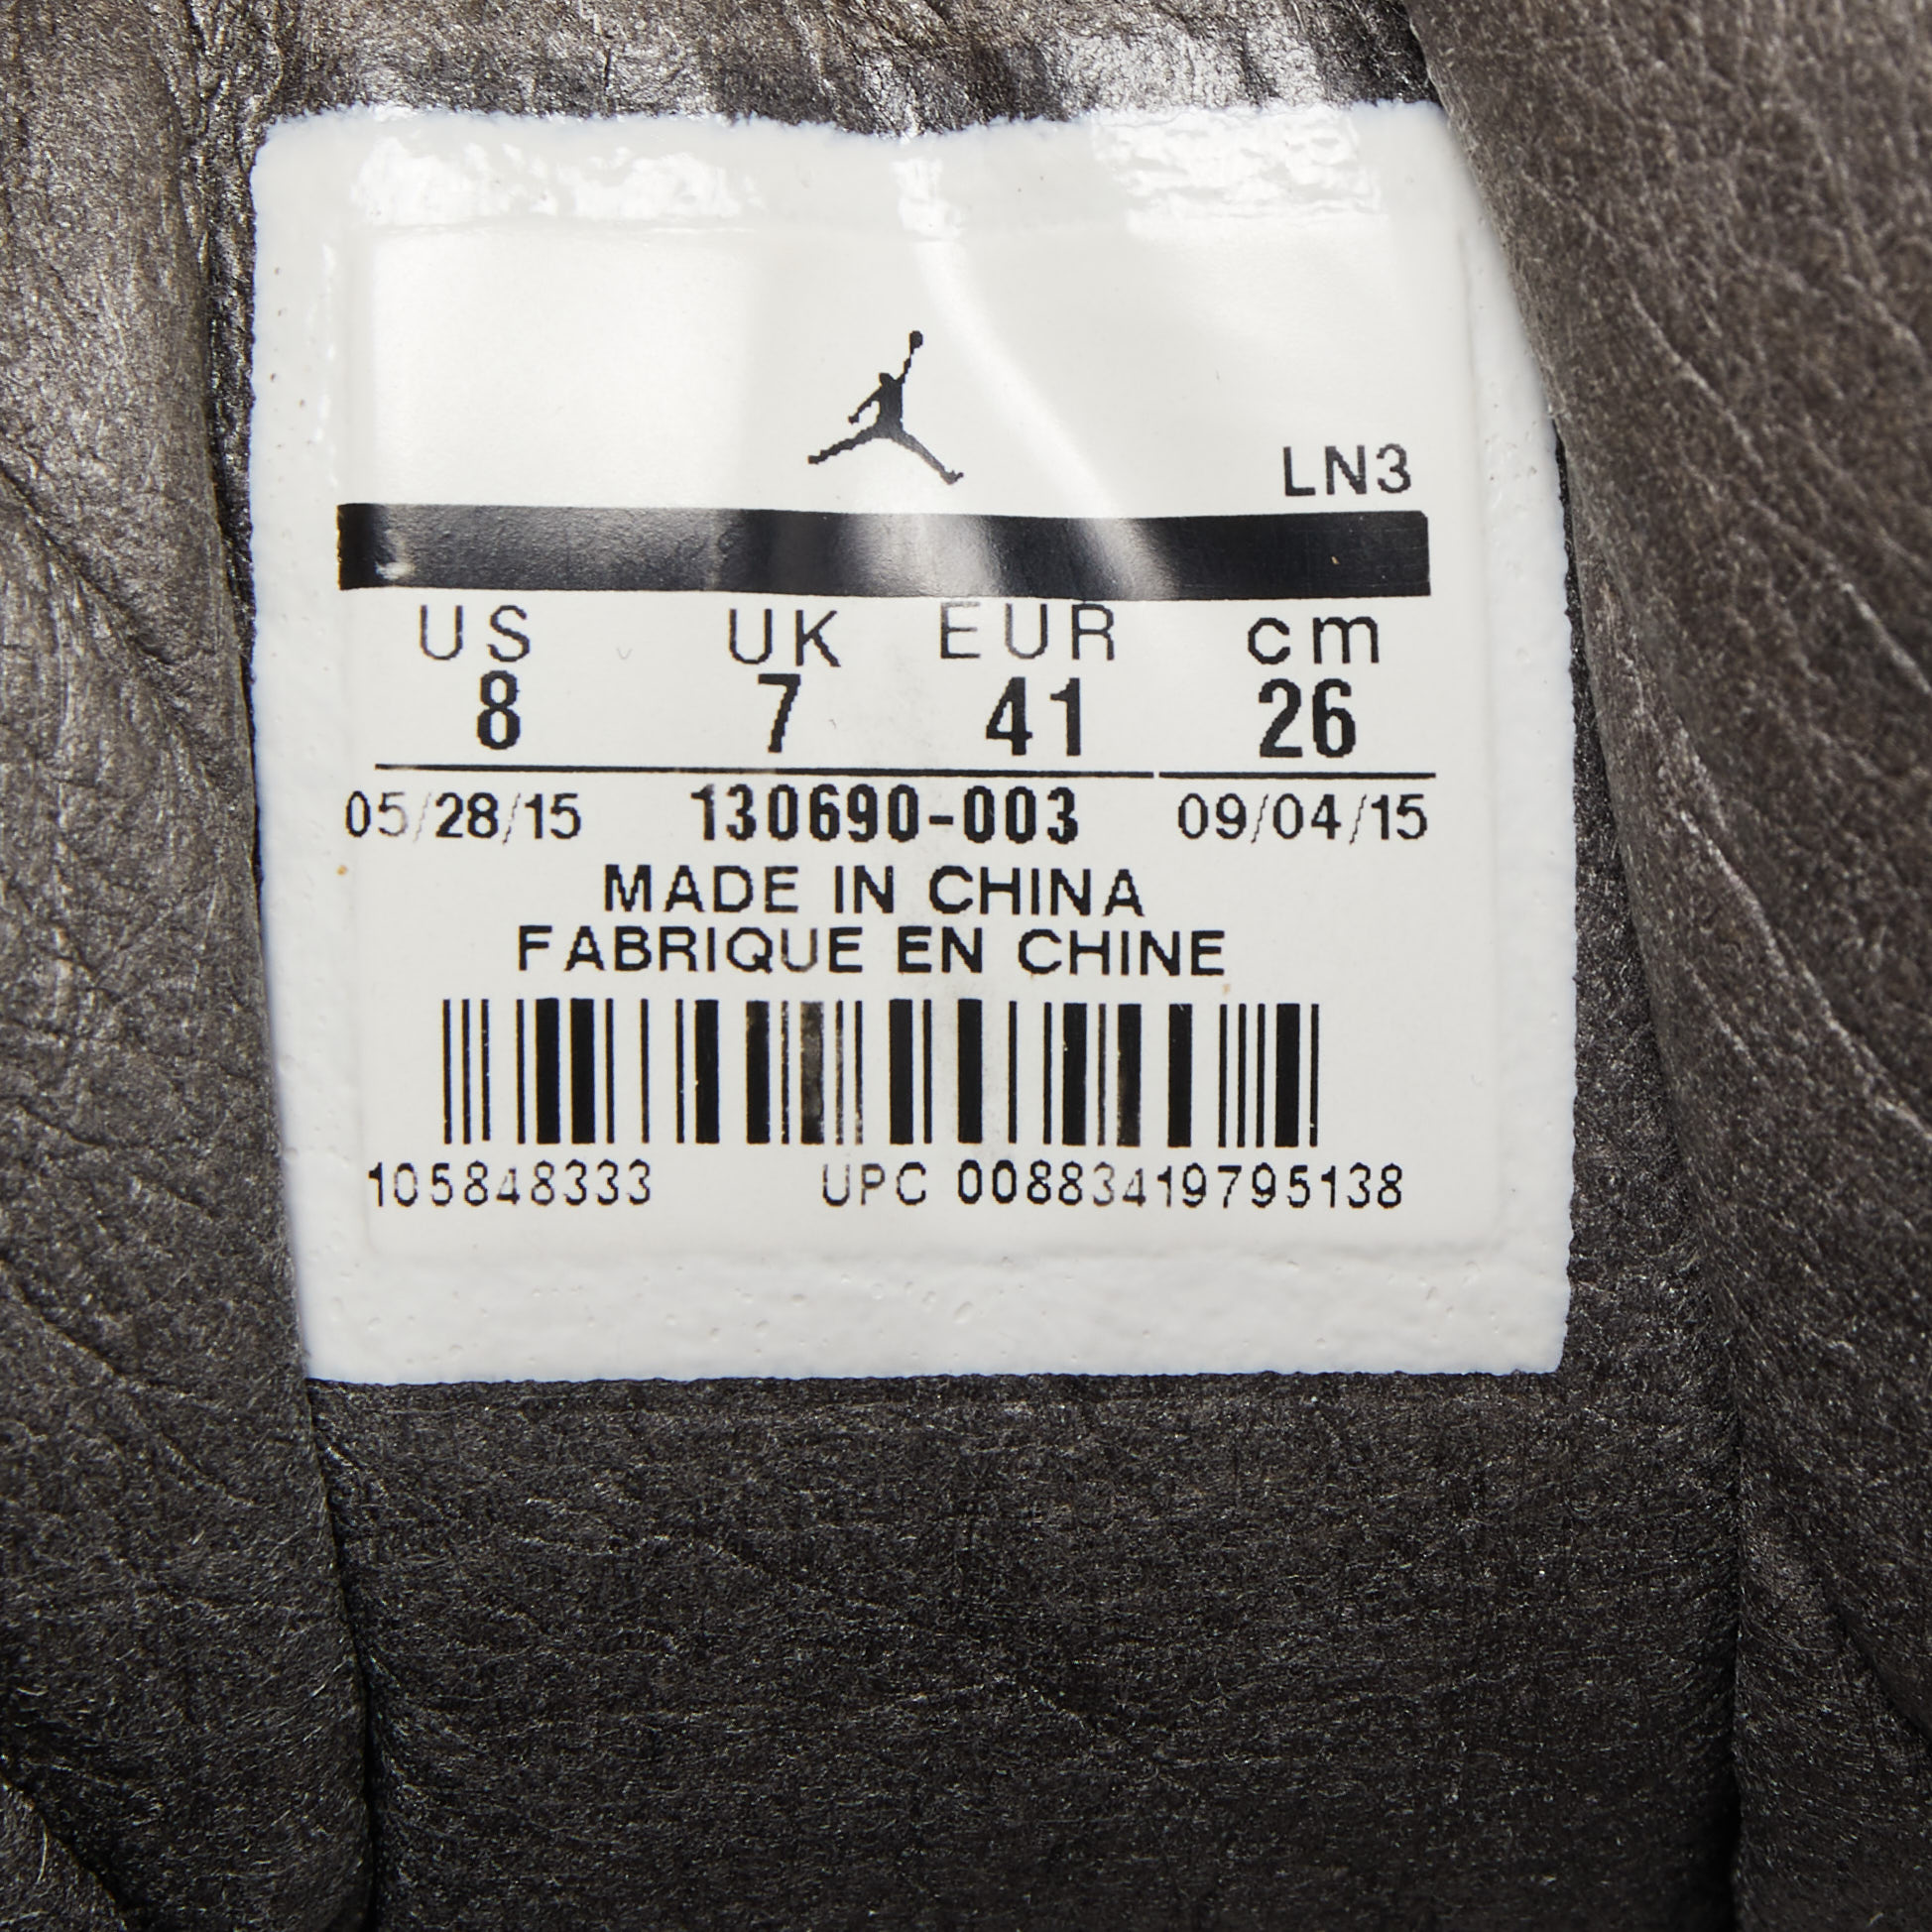 Air Jordans Grey Nubuck Leather High Top Sneakers Size 41